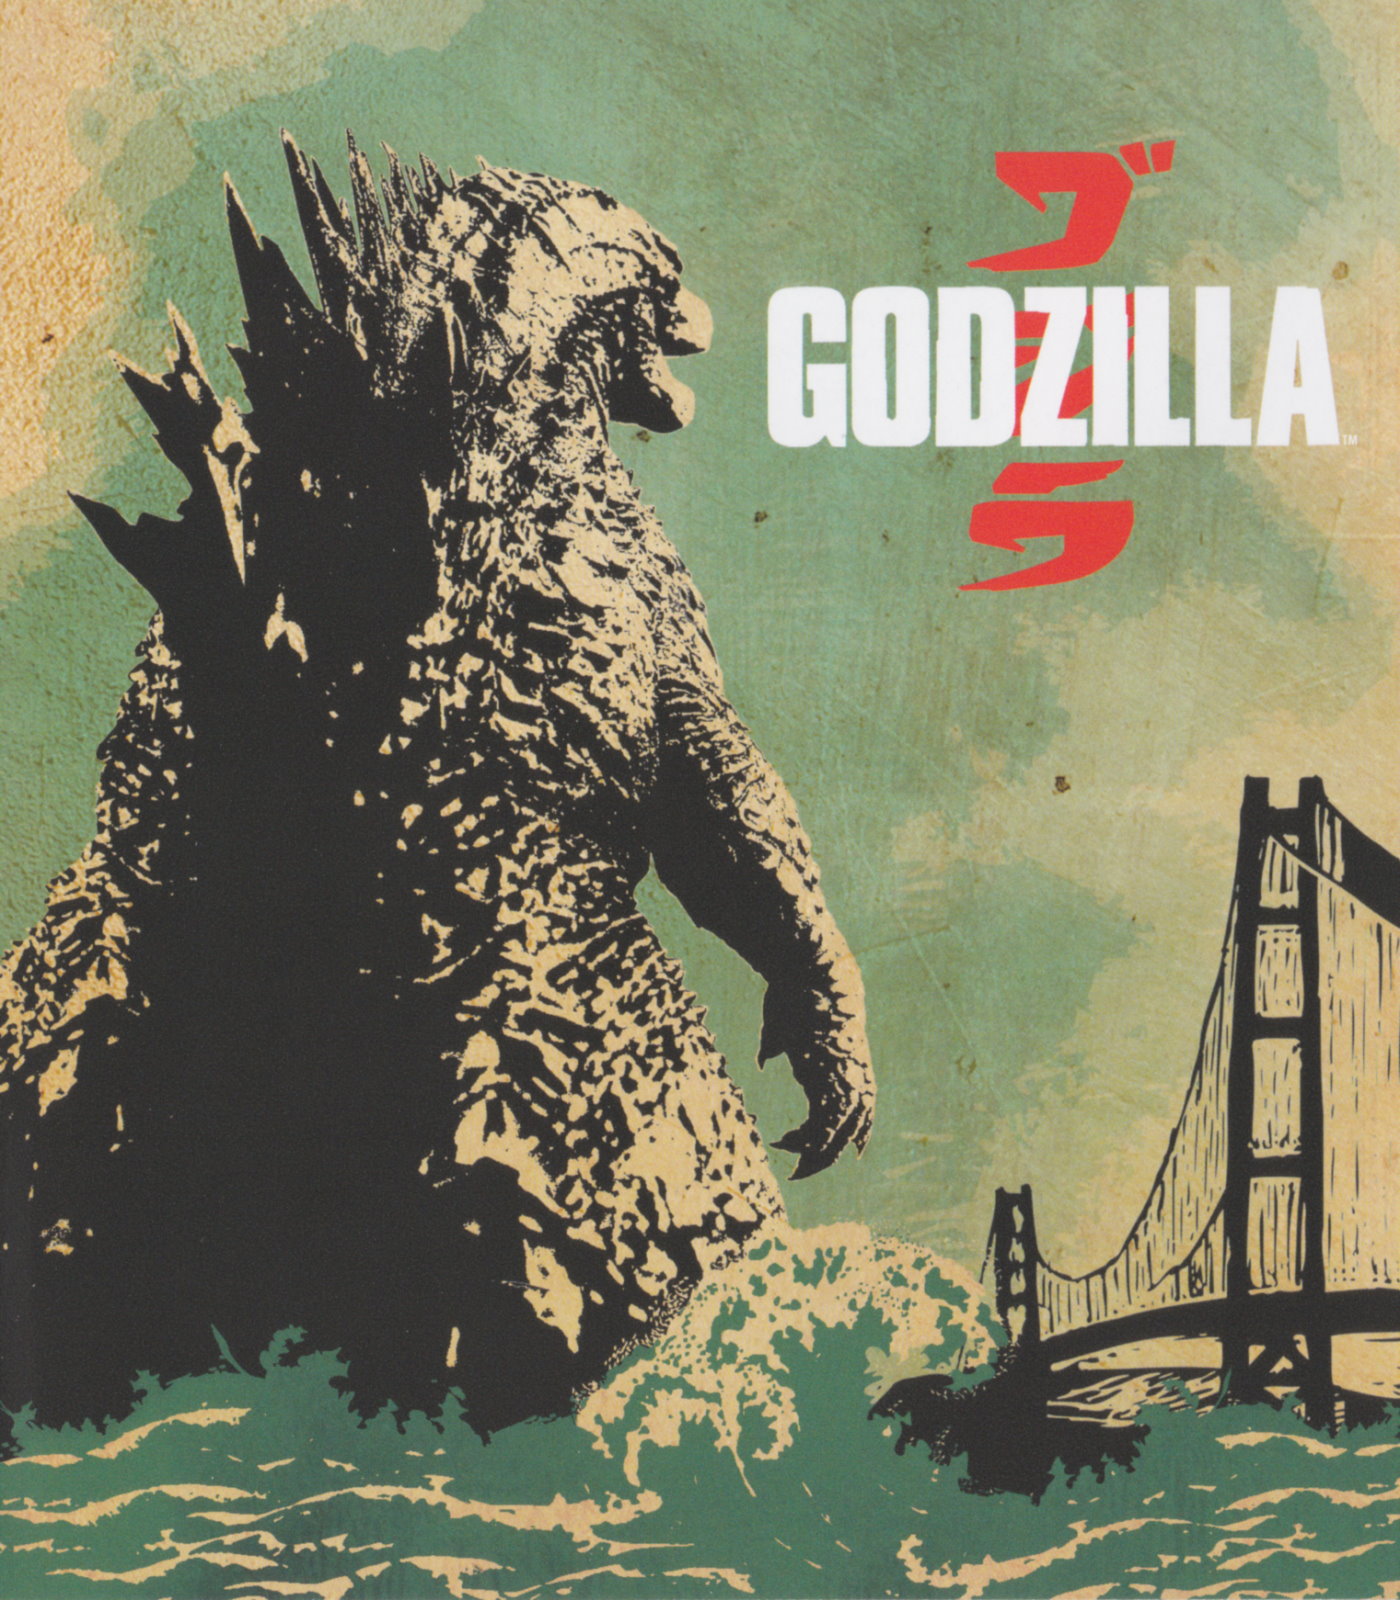 Cover - Godzilla.jpg